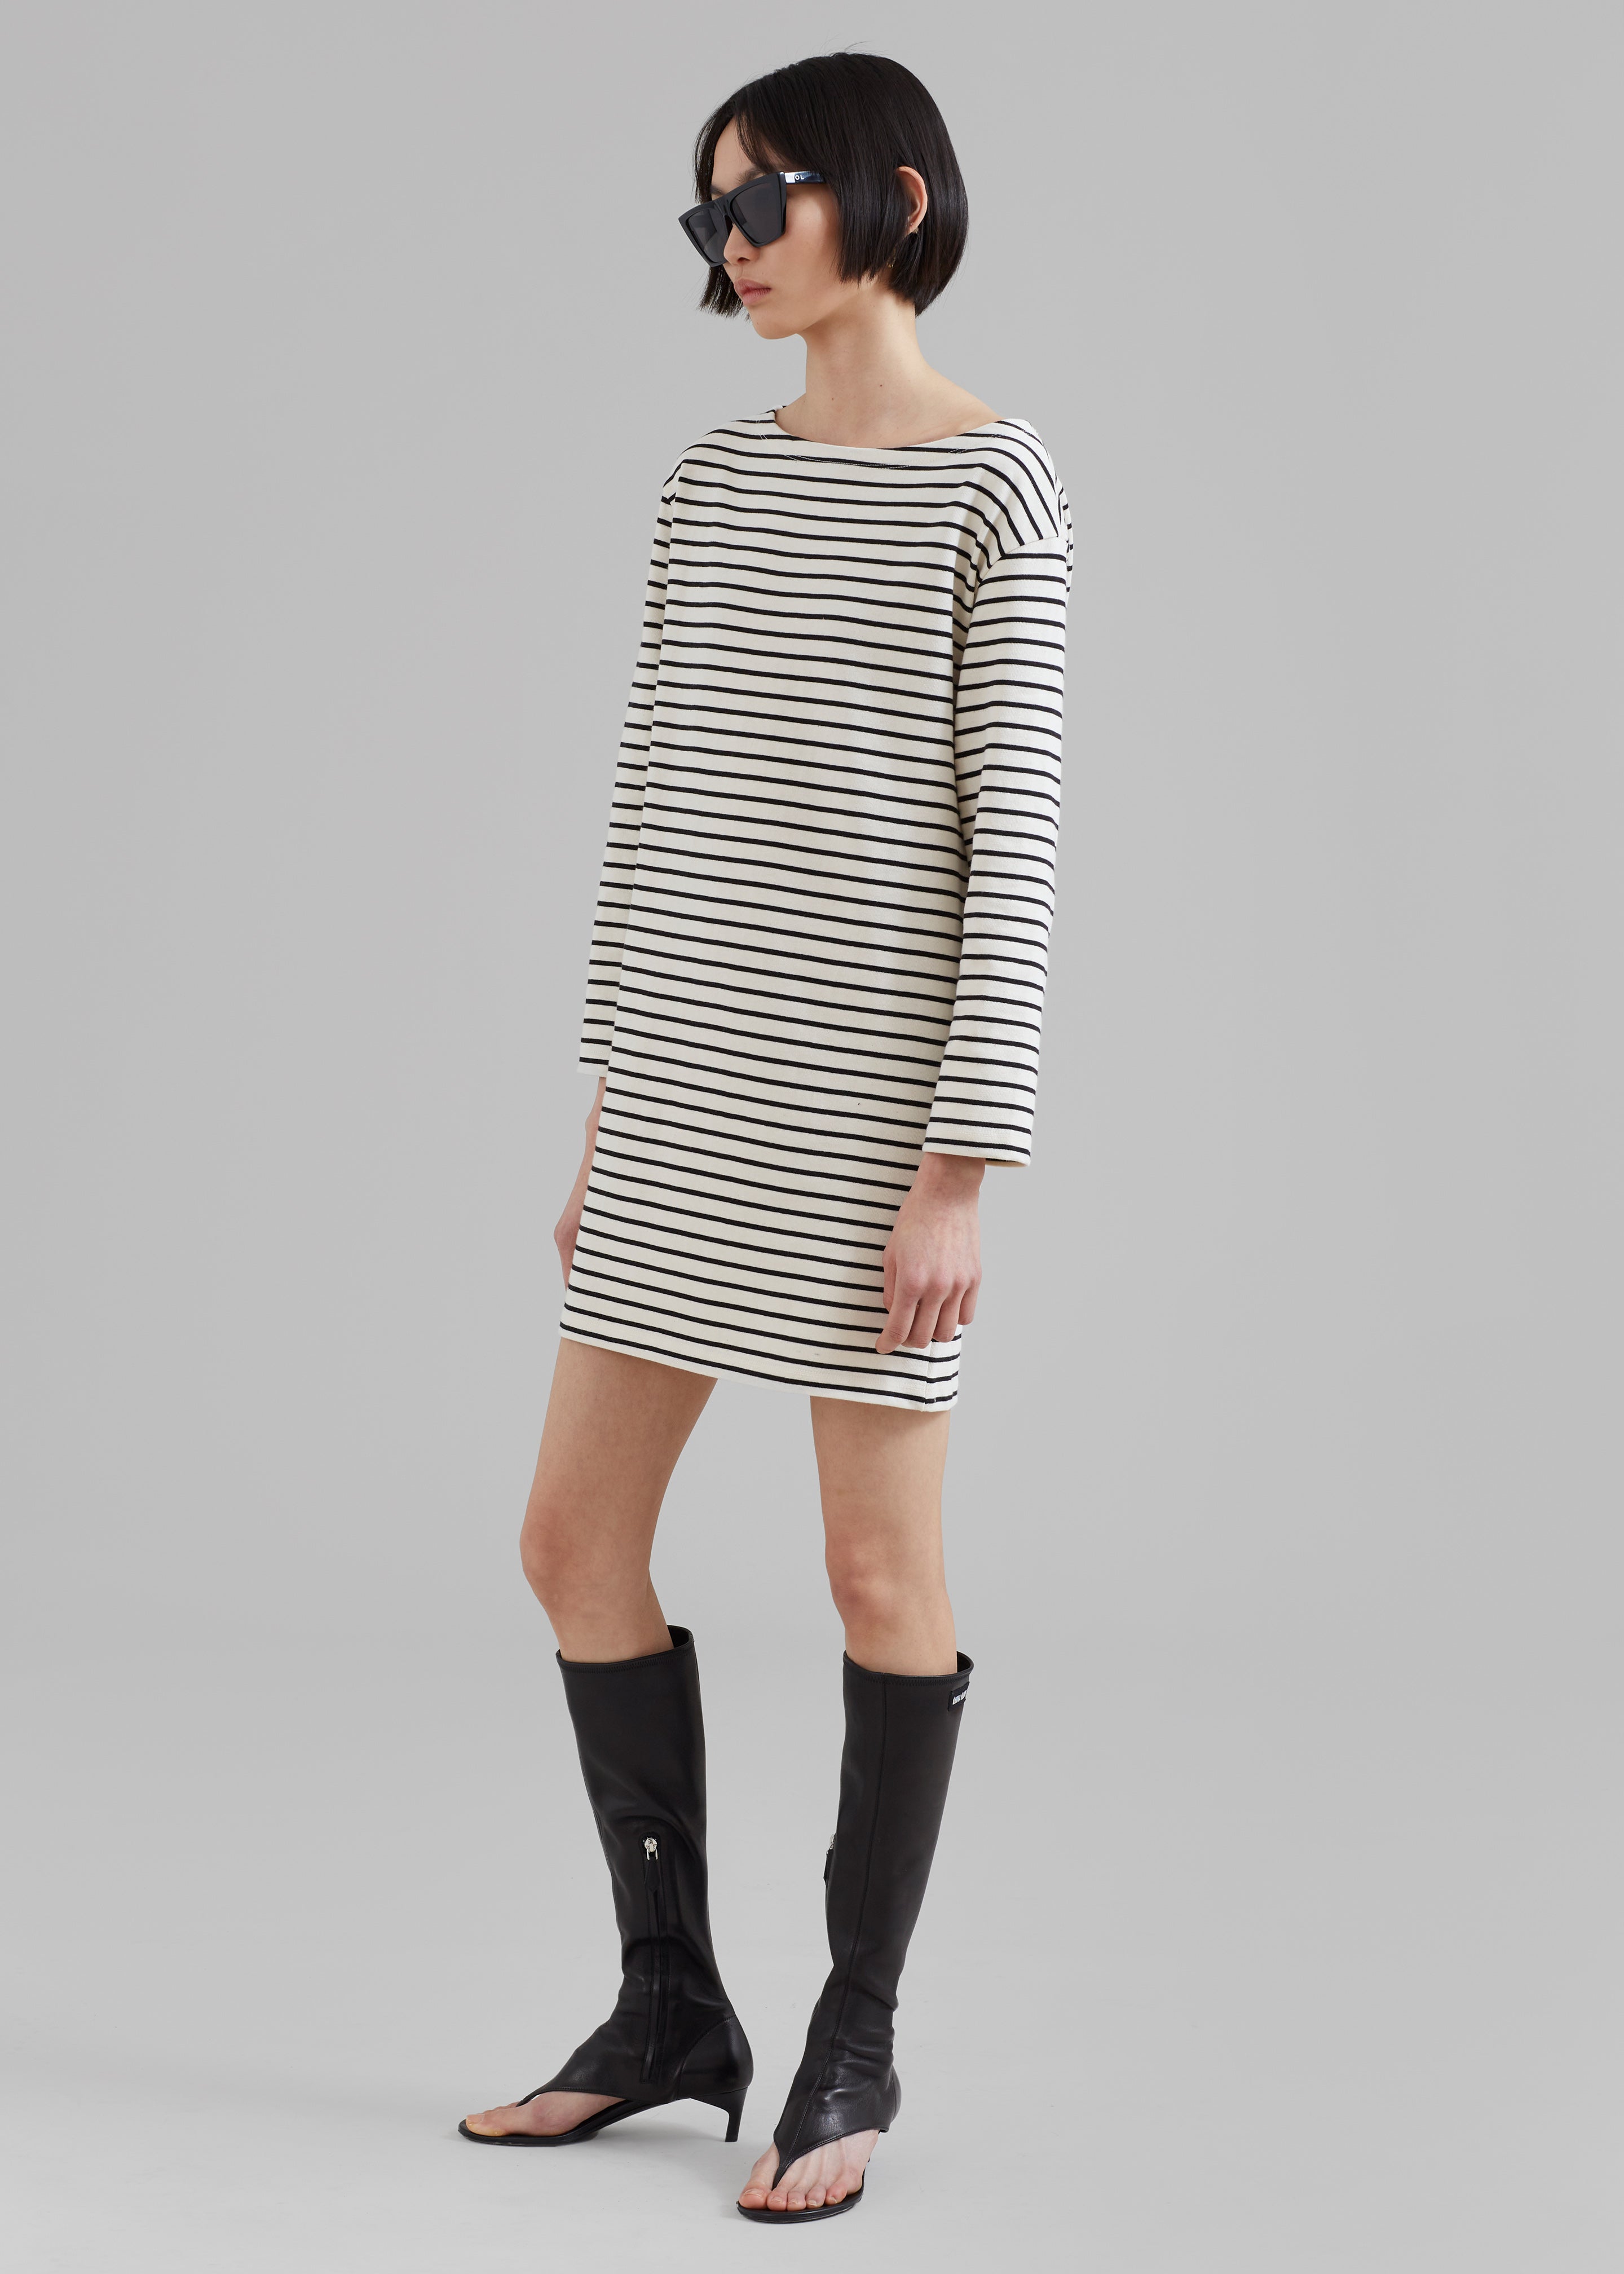 Nino Mini Dress - Black Stripe - 1